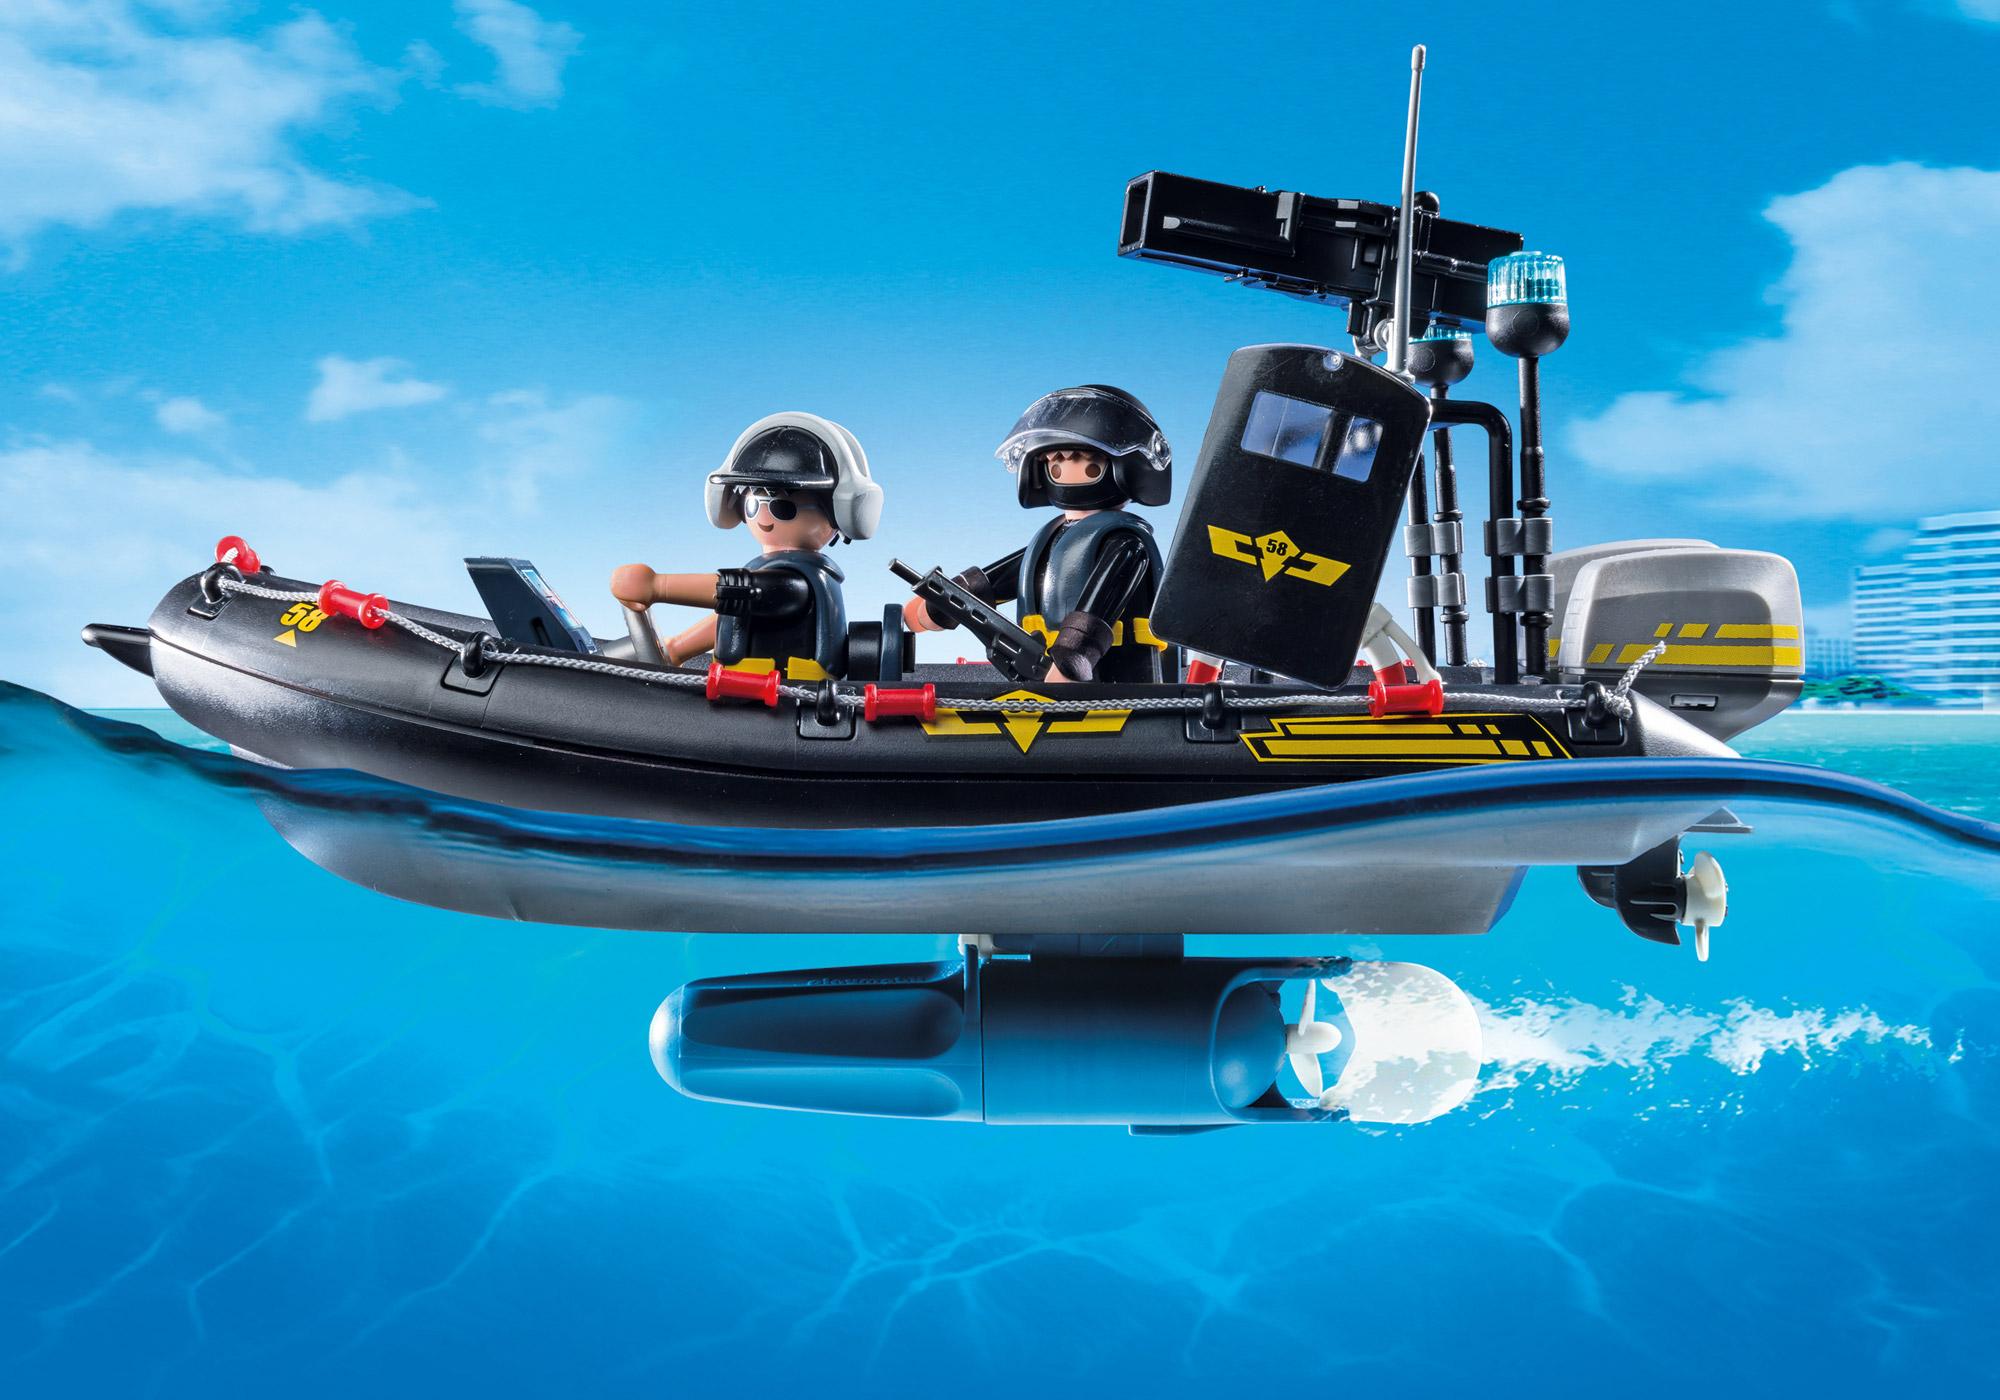 playmobil police speedboat